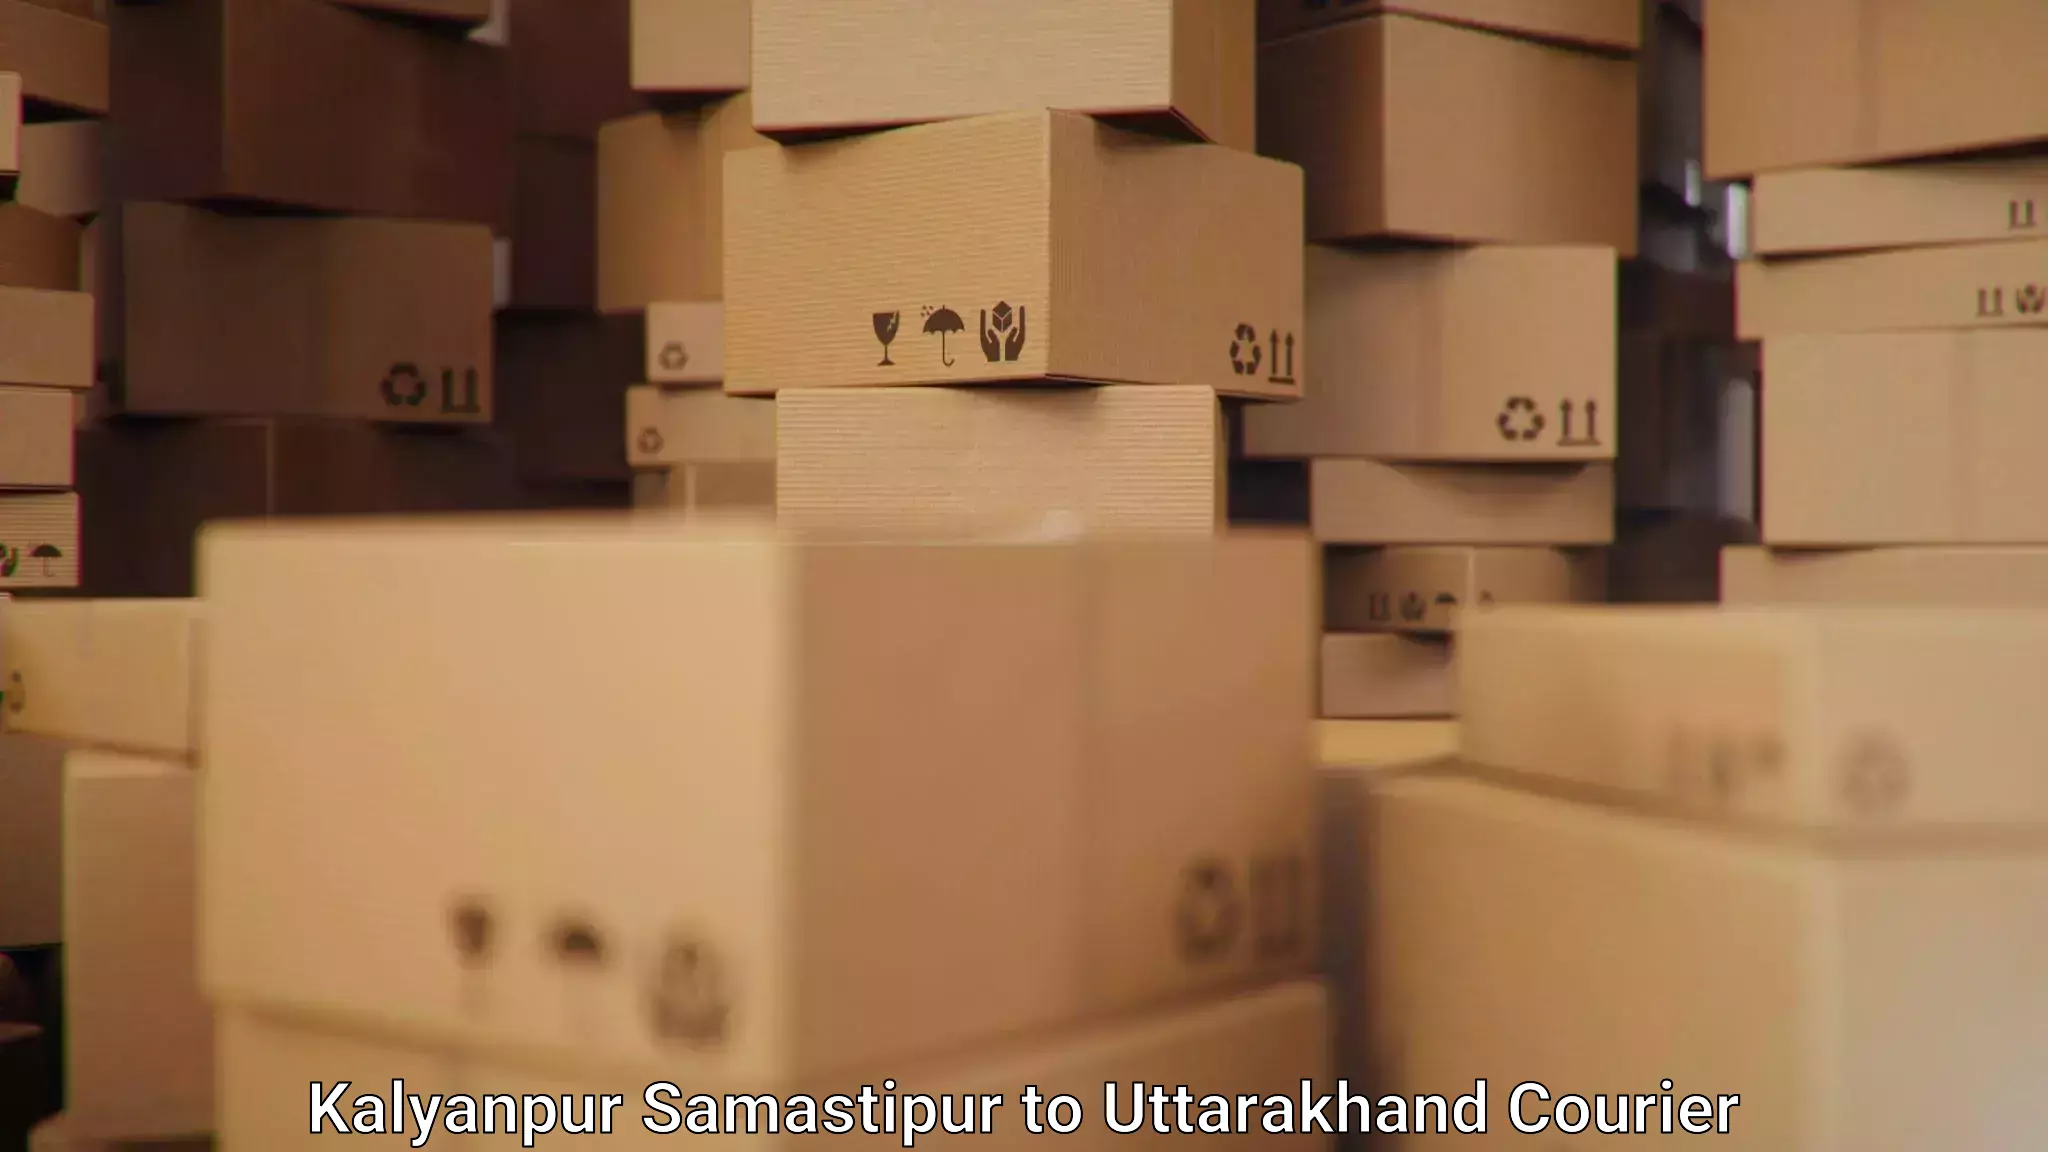 Courier service innovation Kalyanpur Samastipur to Almora